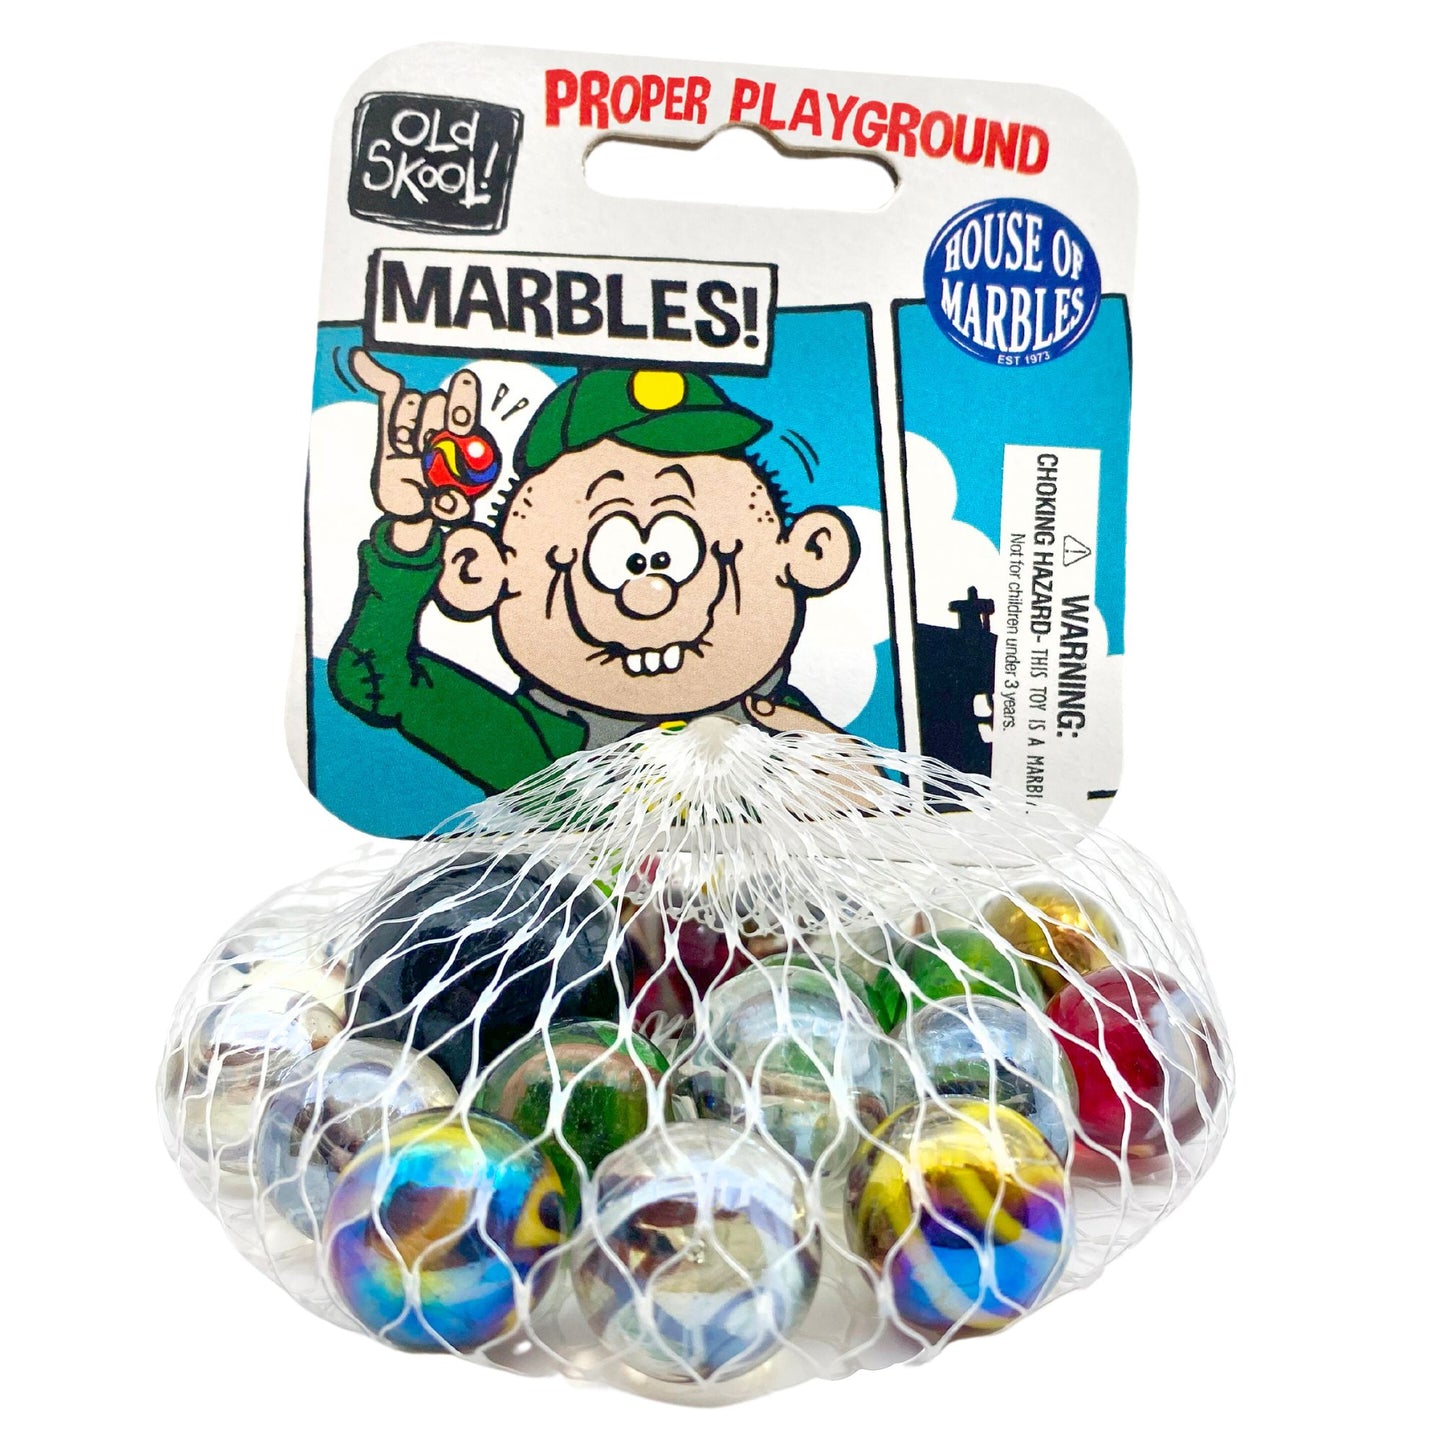 Proper Playground Marbles